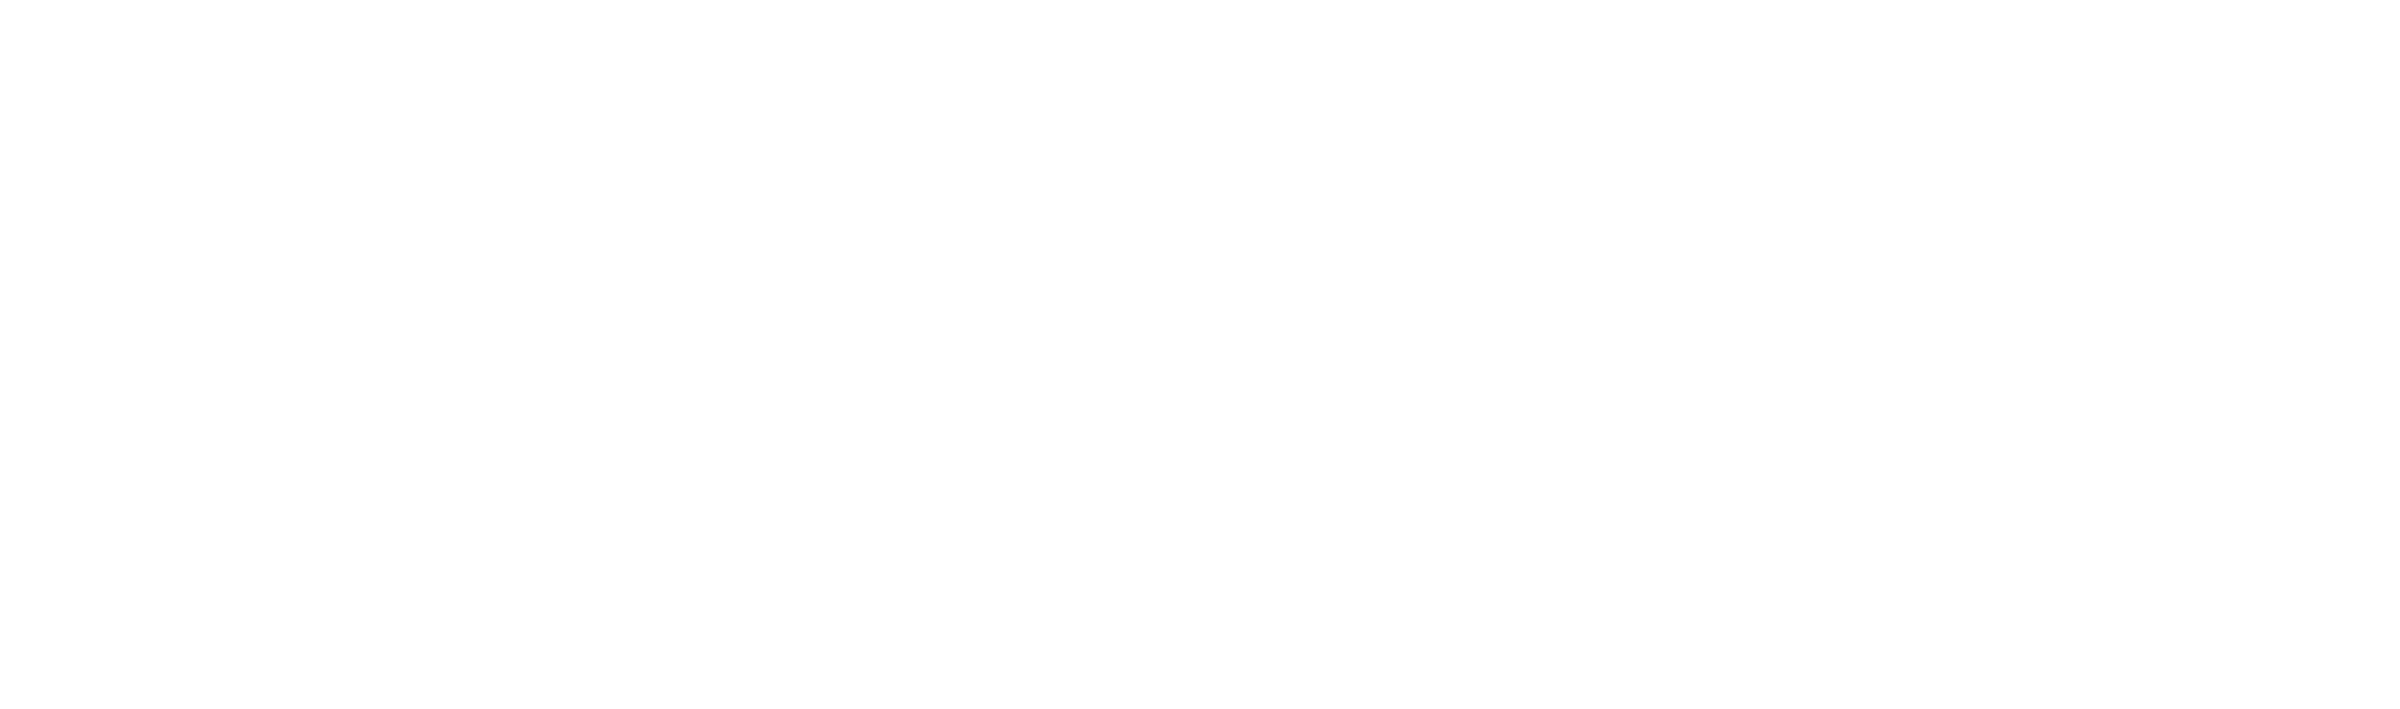  Georgia Southern University